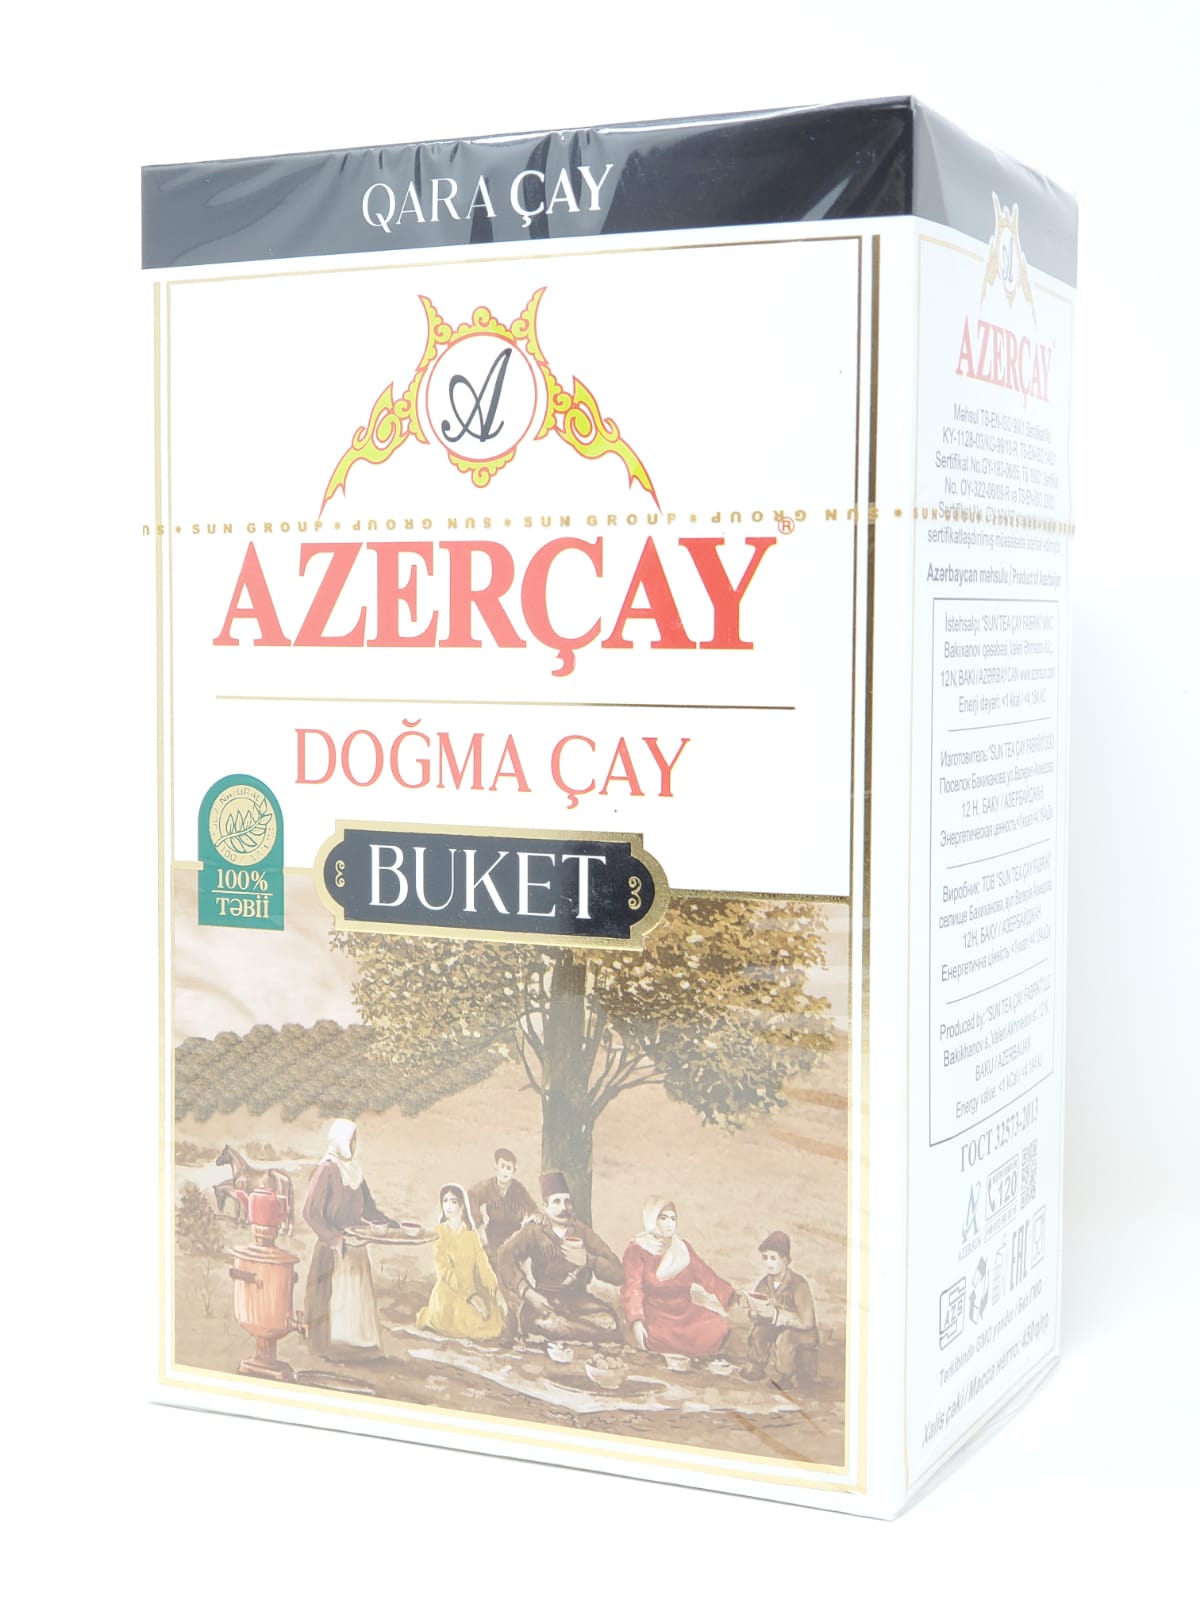 AZERCHAY DOGMA CAY BUKET BLACK TEA 450g